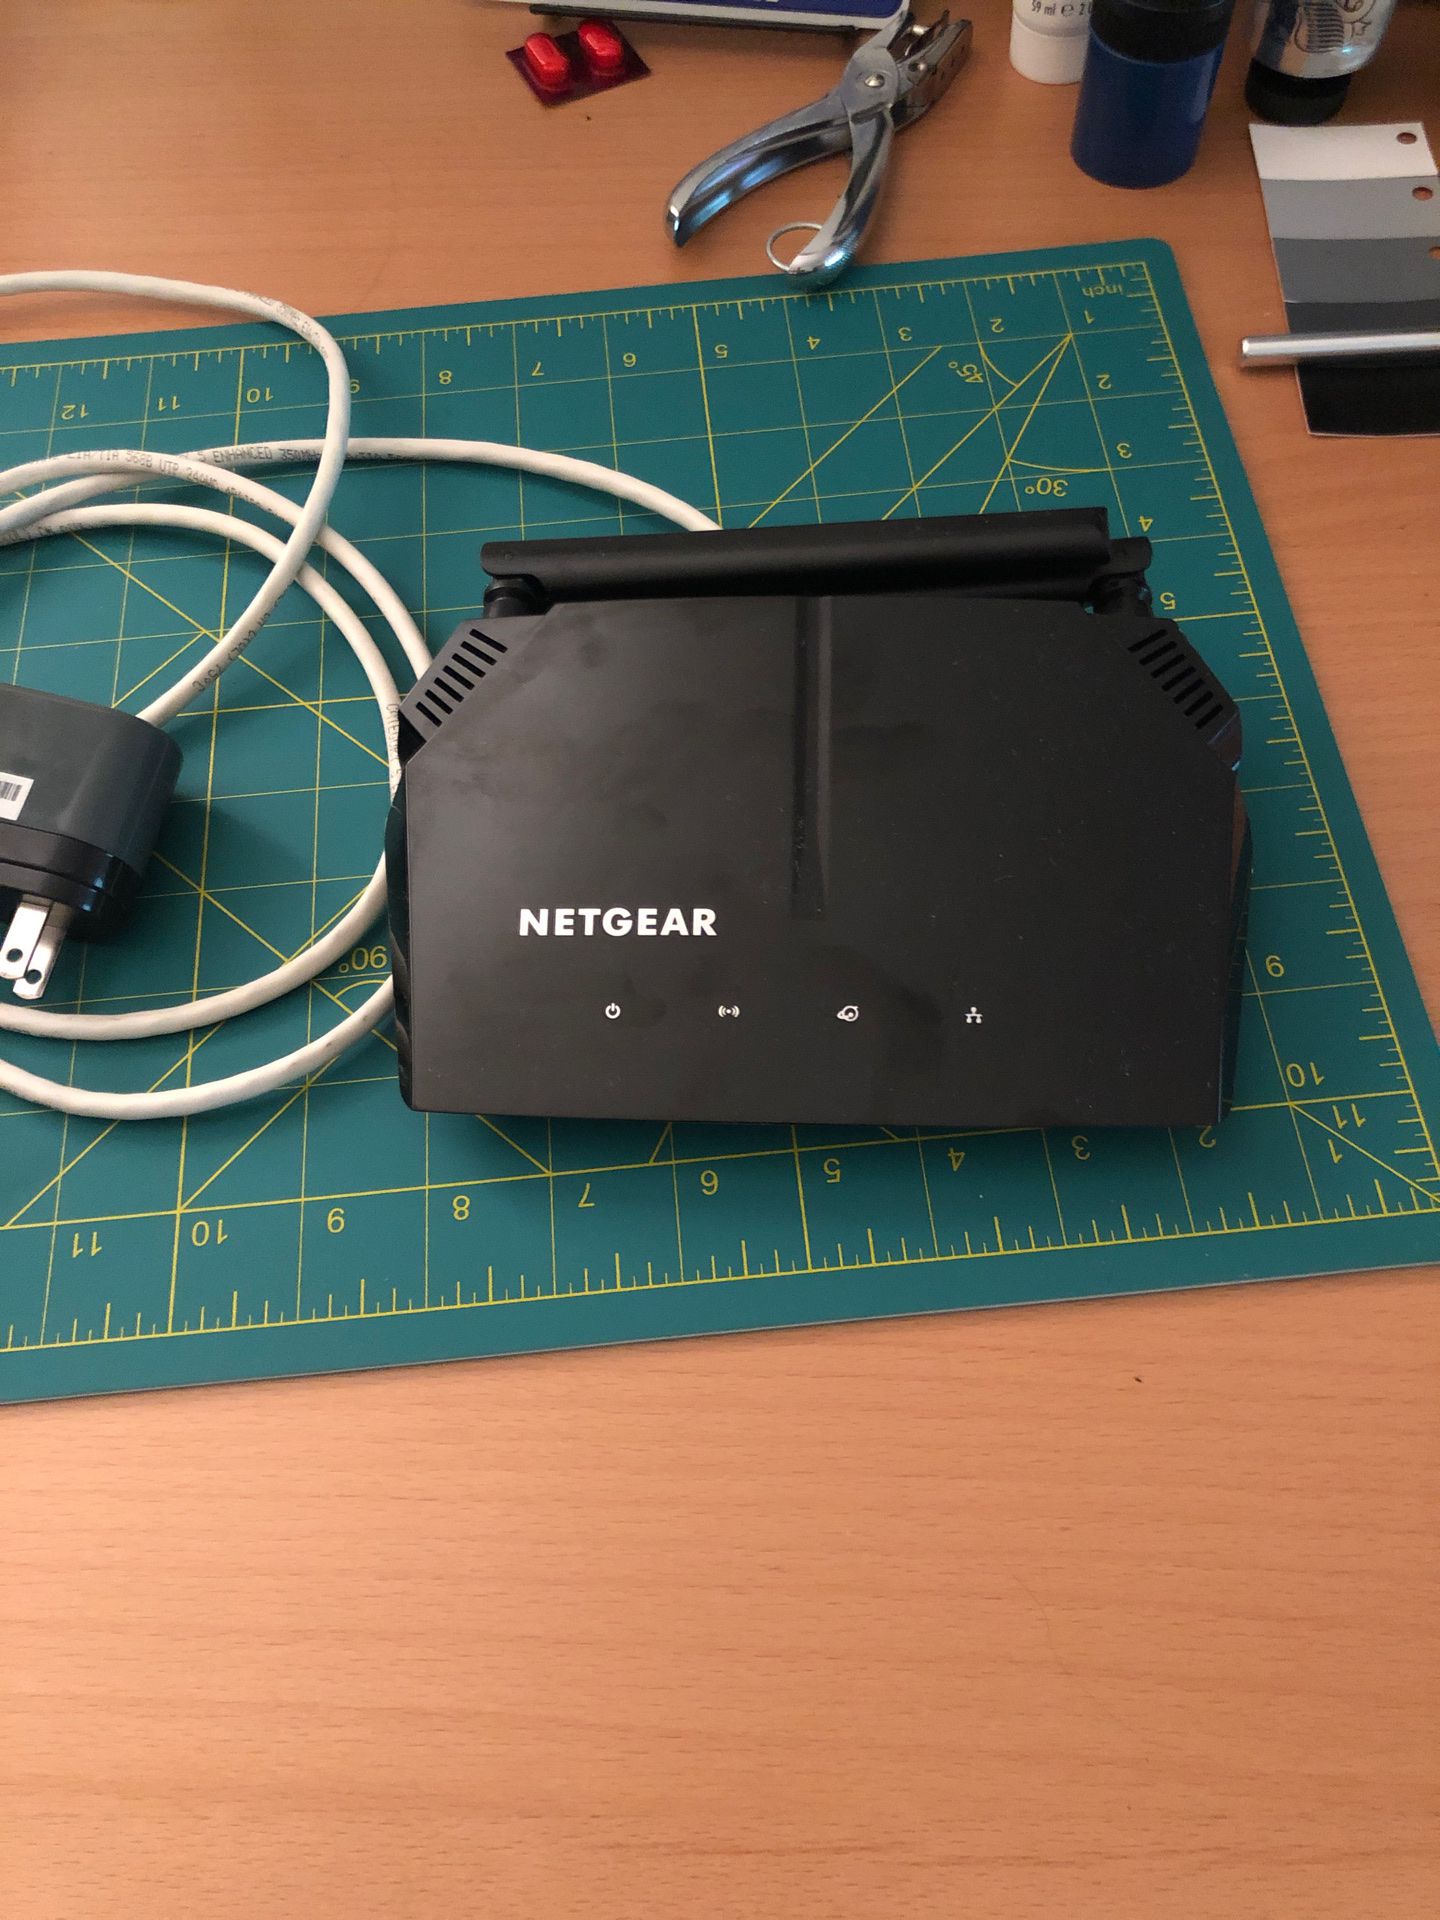 Netgear AC 1200 WiFi router